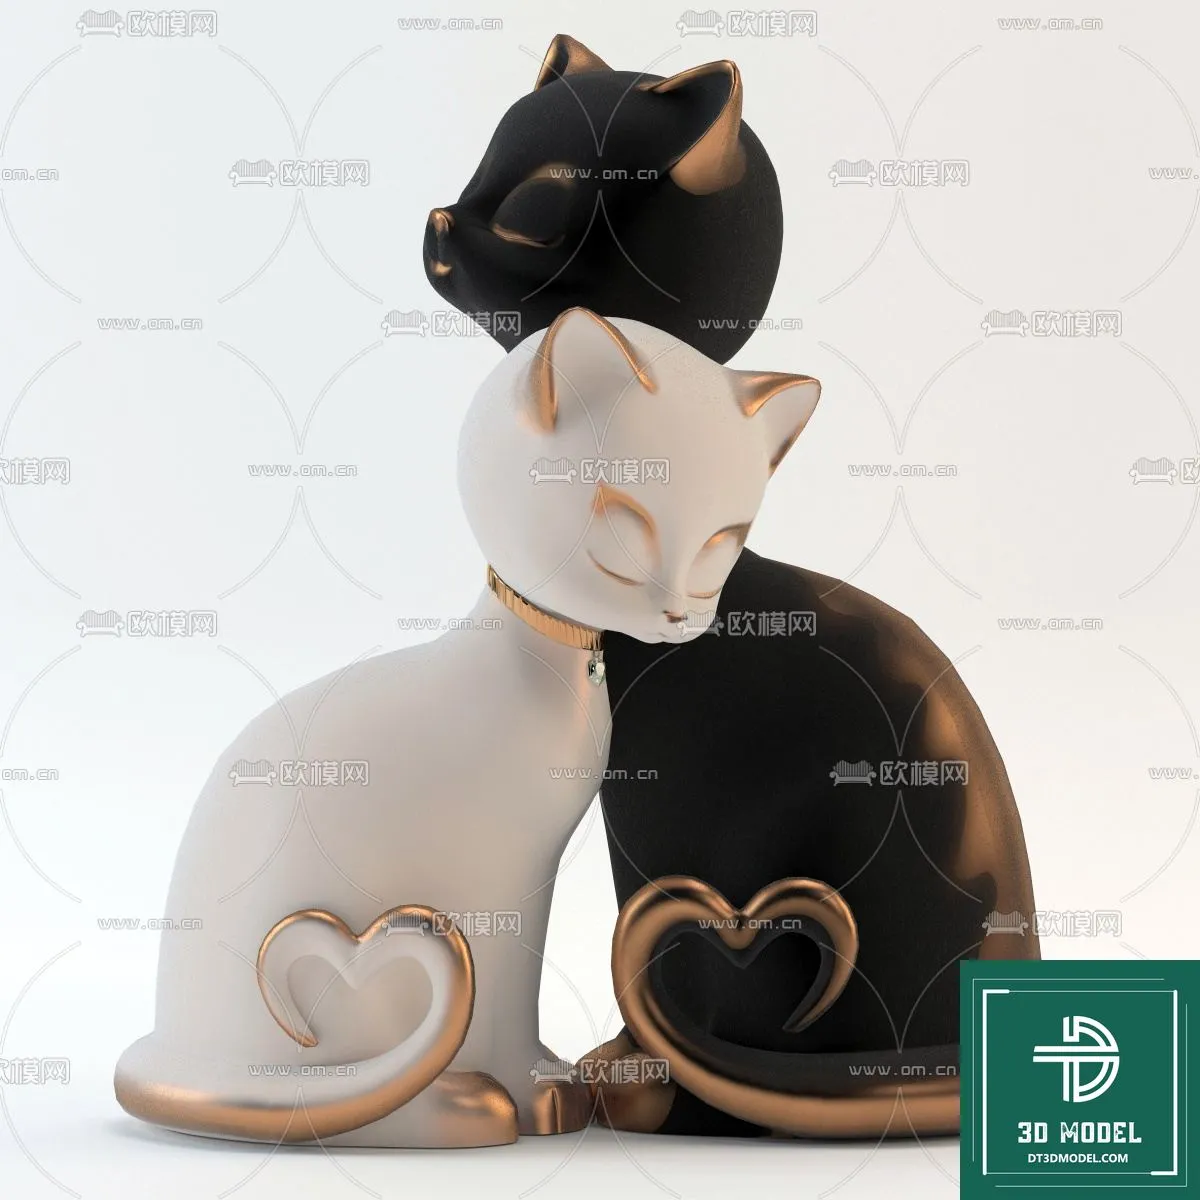 LUCKY CAT – 3D MODELS – 016 – PRO